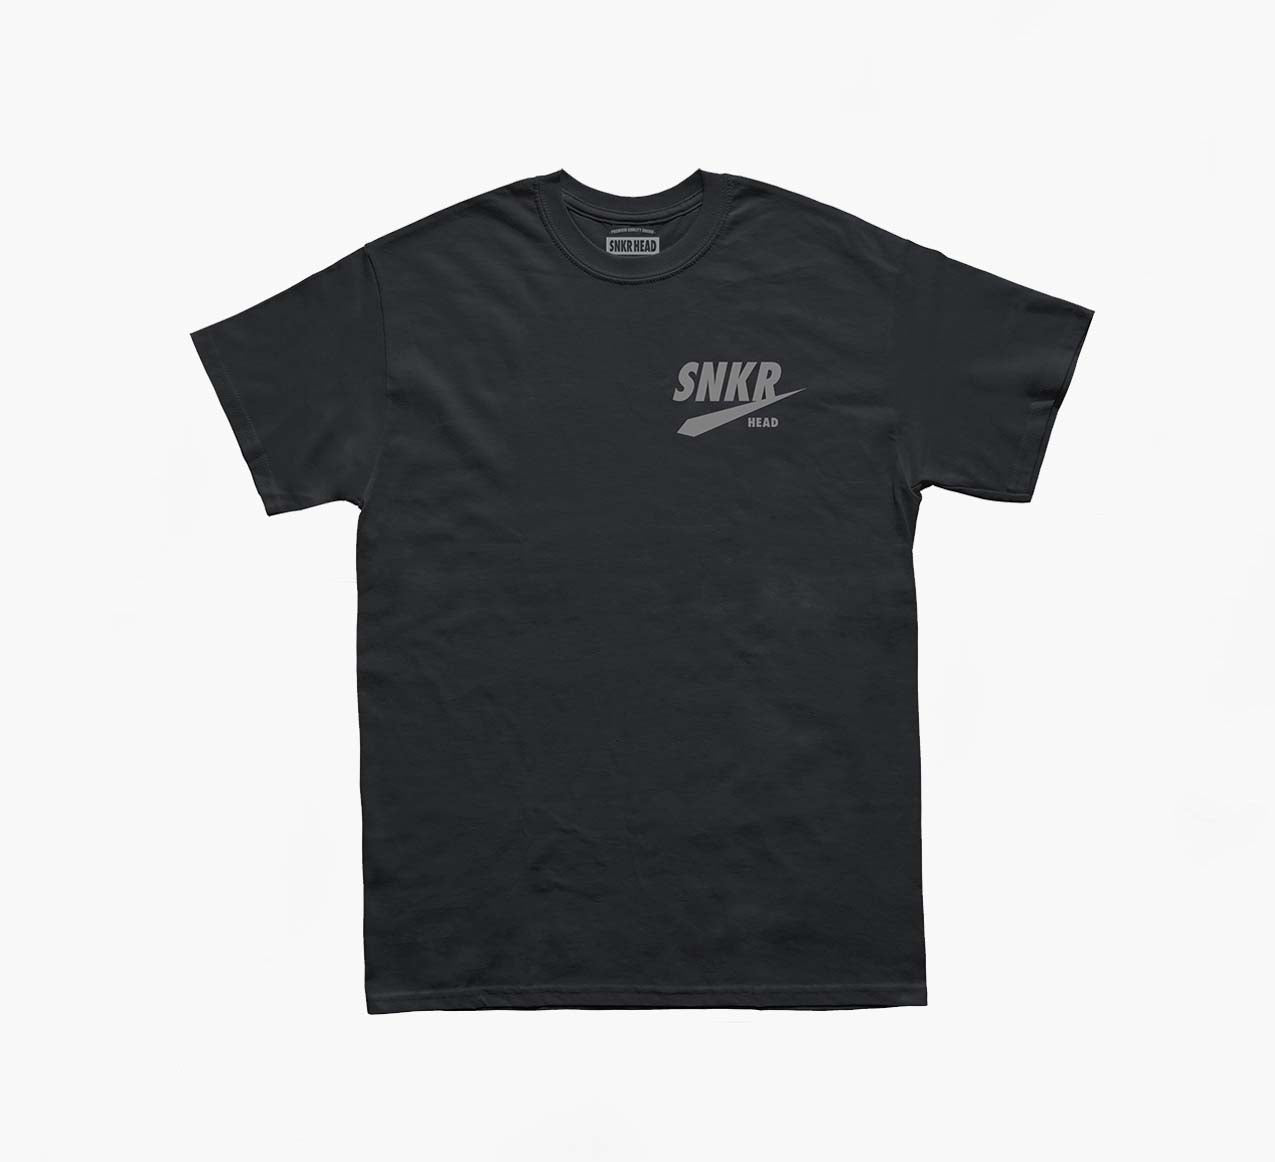 SNKR HEAD Reflective Logo Black T-shirt